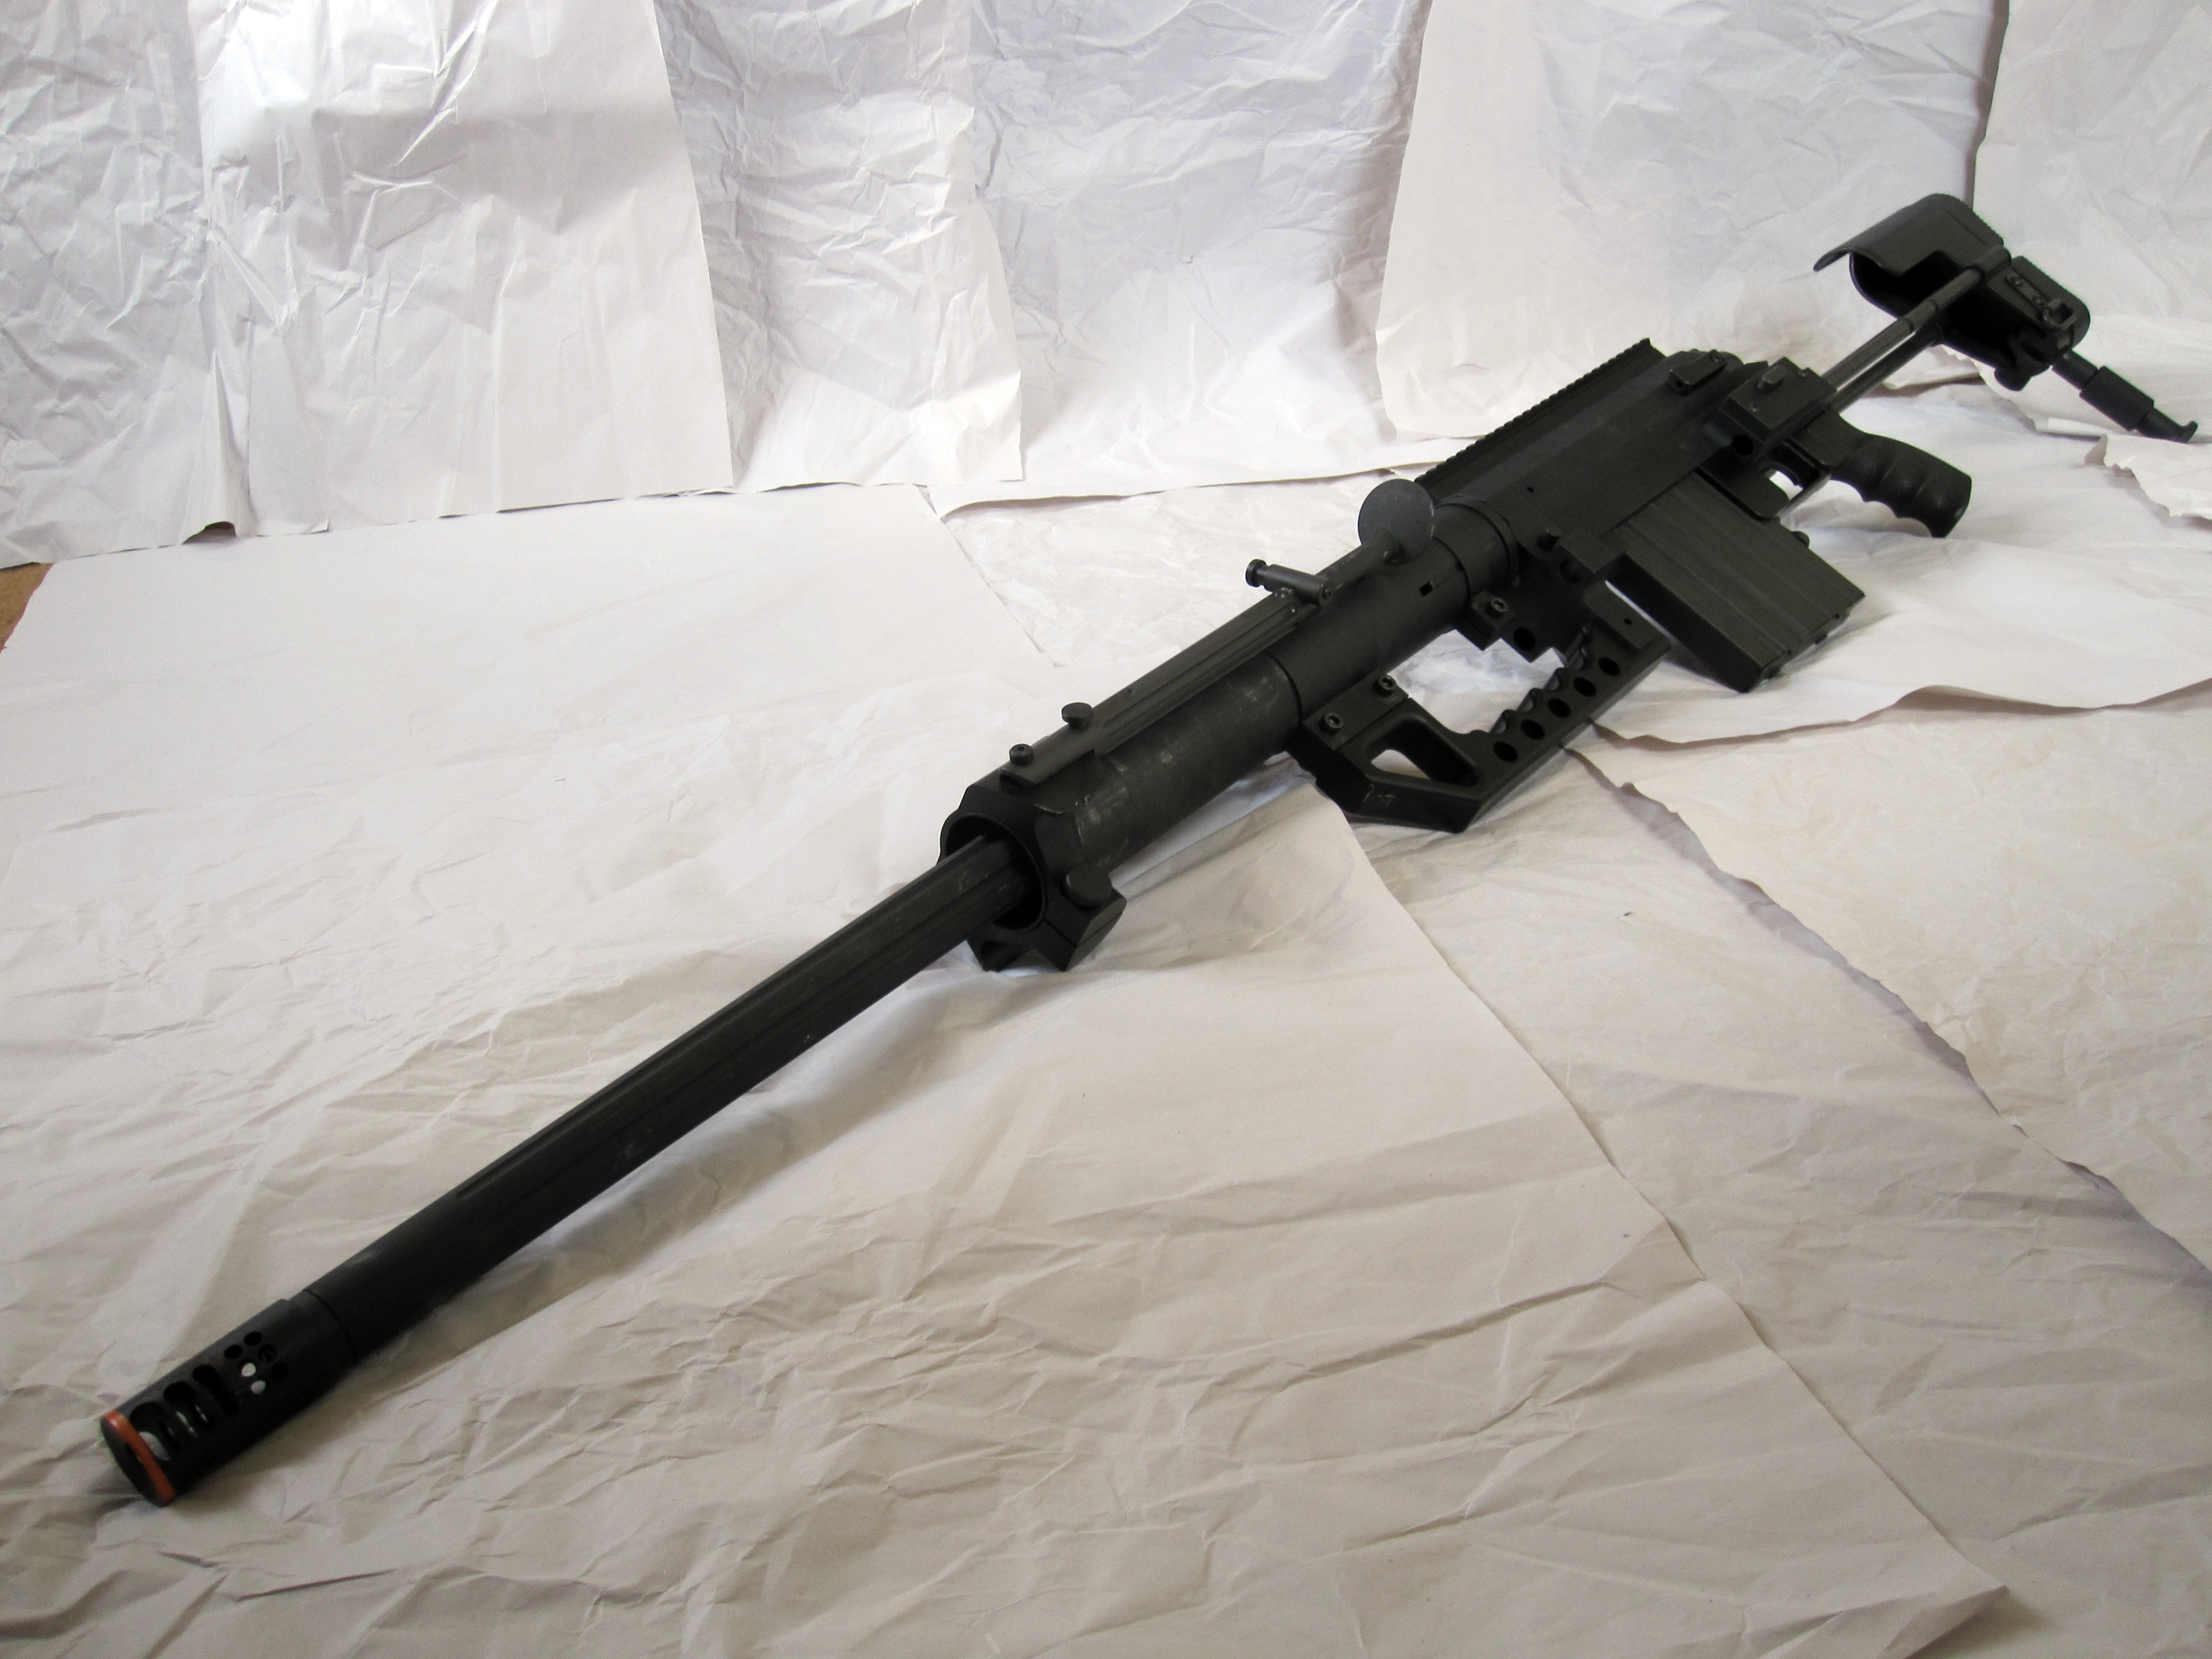 Socom Gear .408 CHEYTAC INTERVENTION M200 gas airsoft gun with CO2.